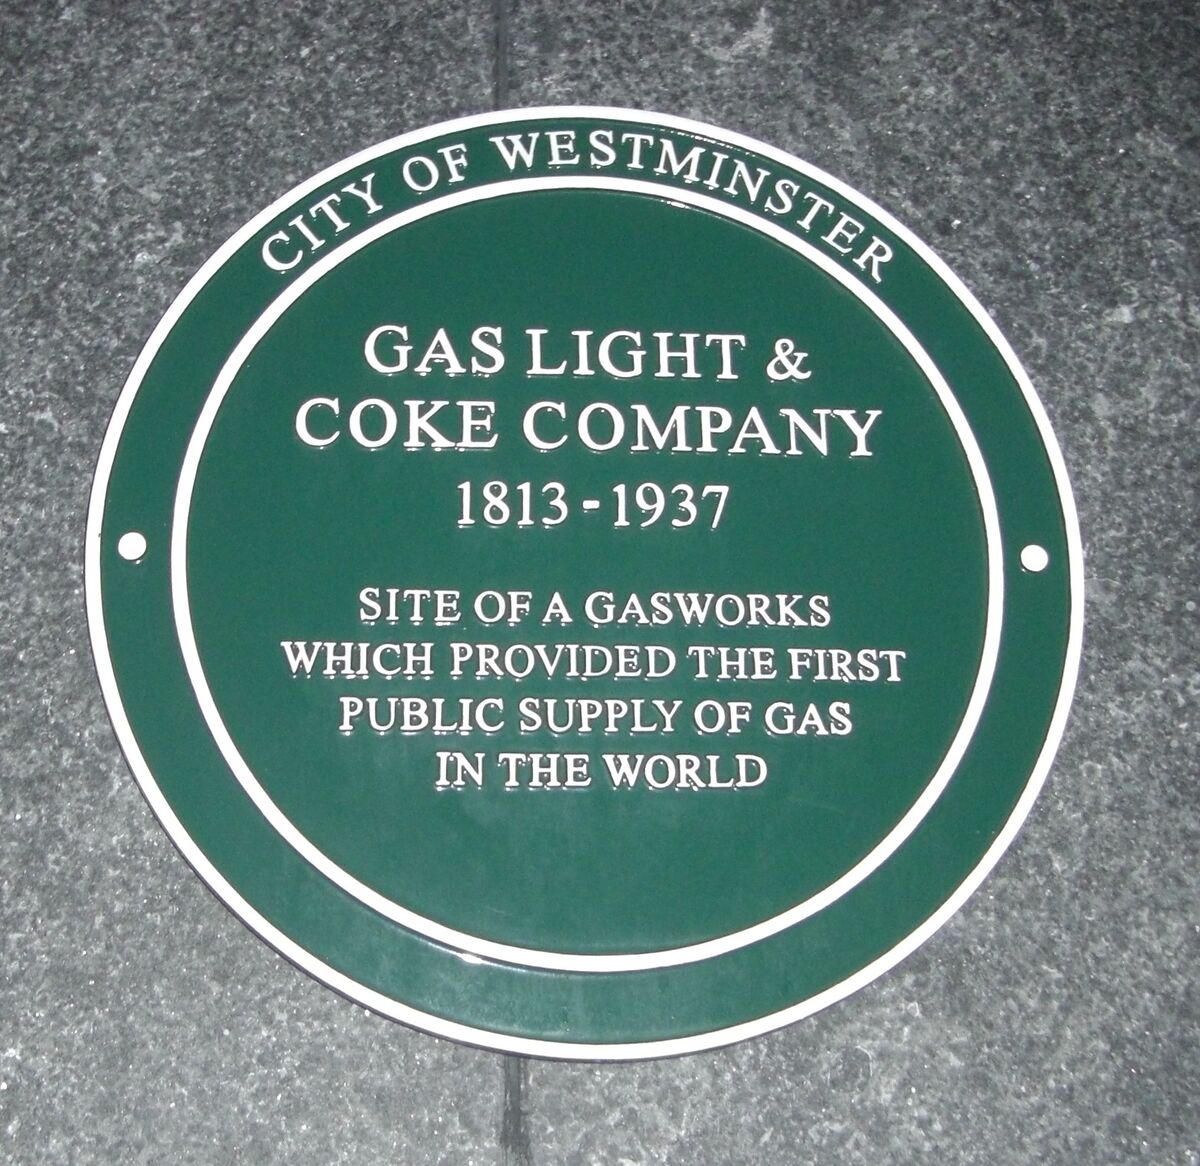 GFD 1/192: Gedenktafel für Imperial Gas Light & Coke Company in London, nach 1937